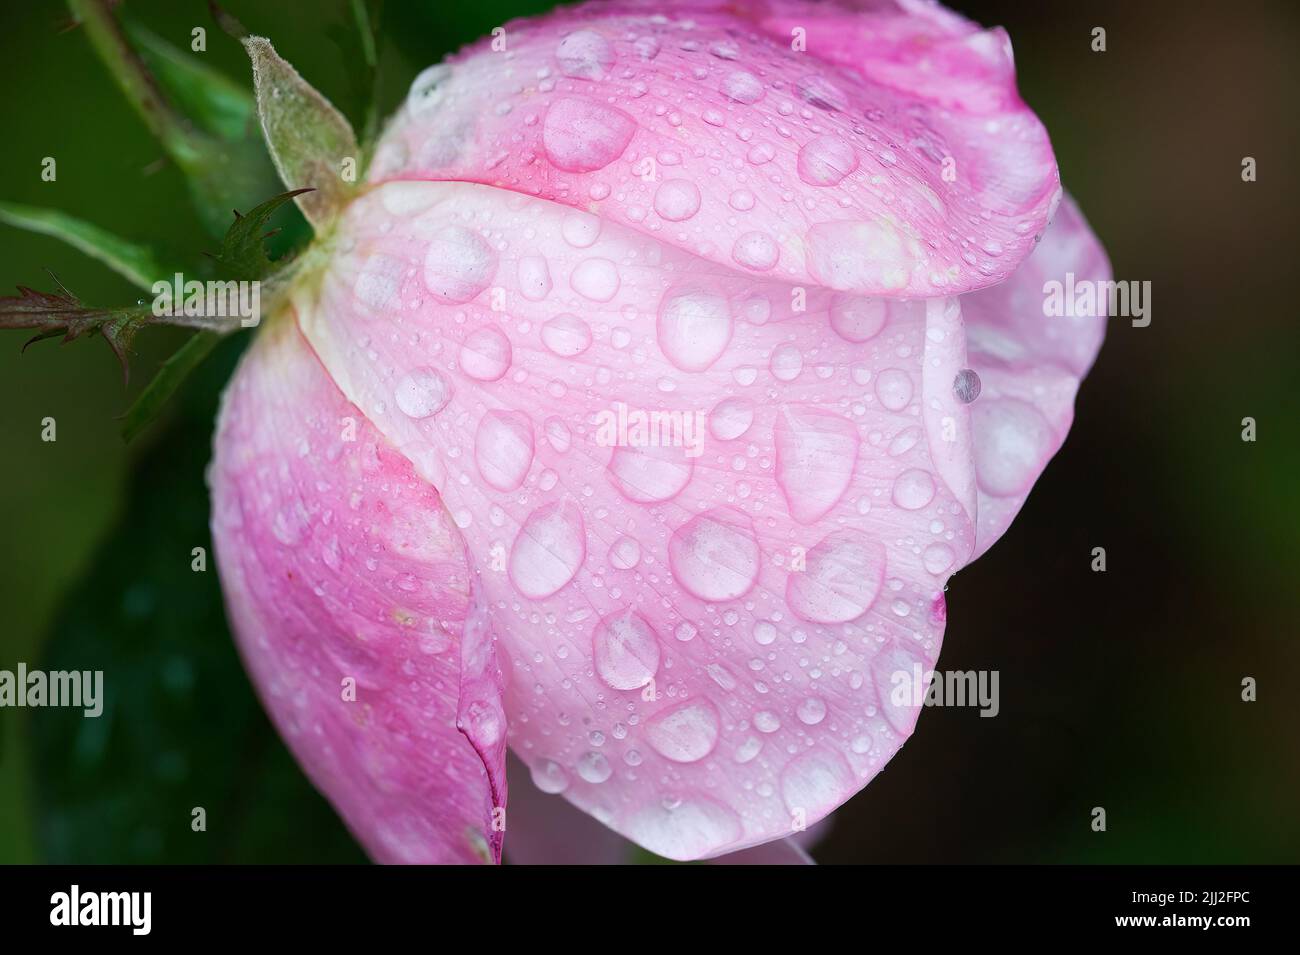 December rose after rain Stock Photo